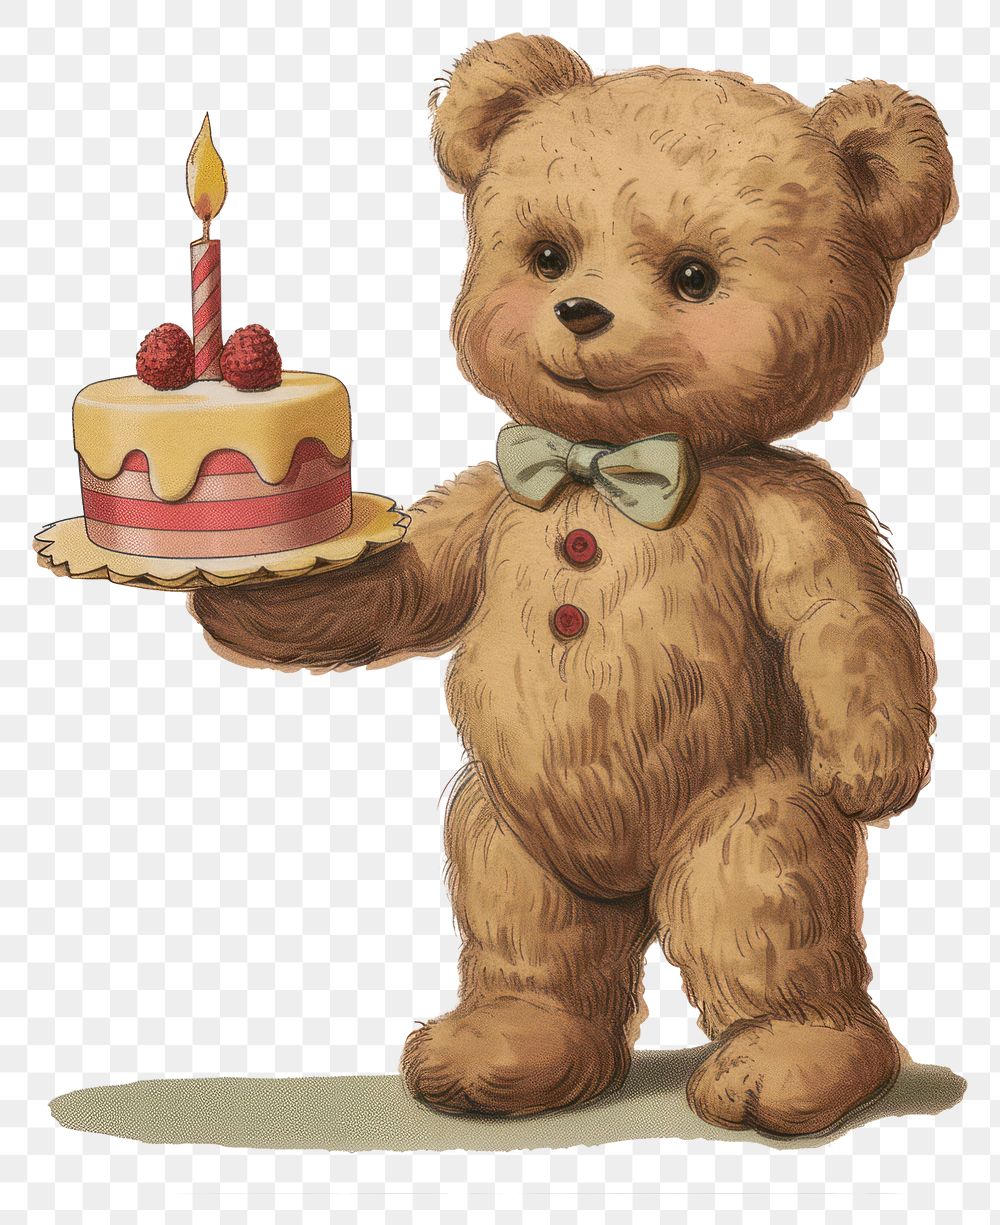 PNG Vintage illustration of teddy bear cake birthday dessert